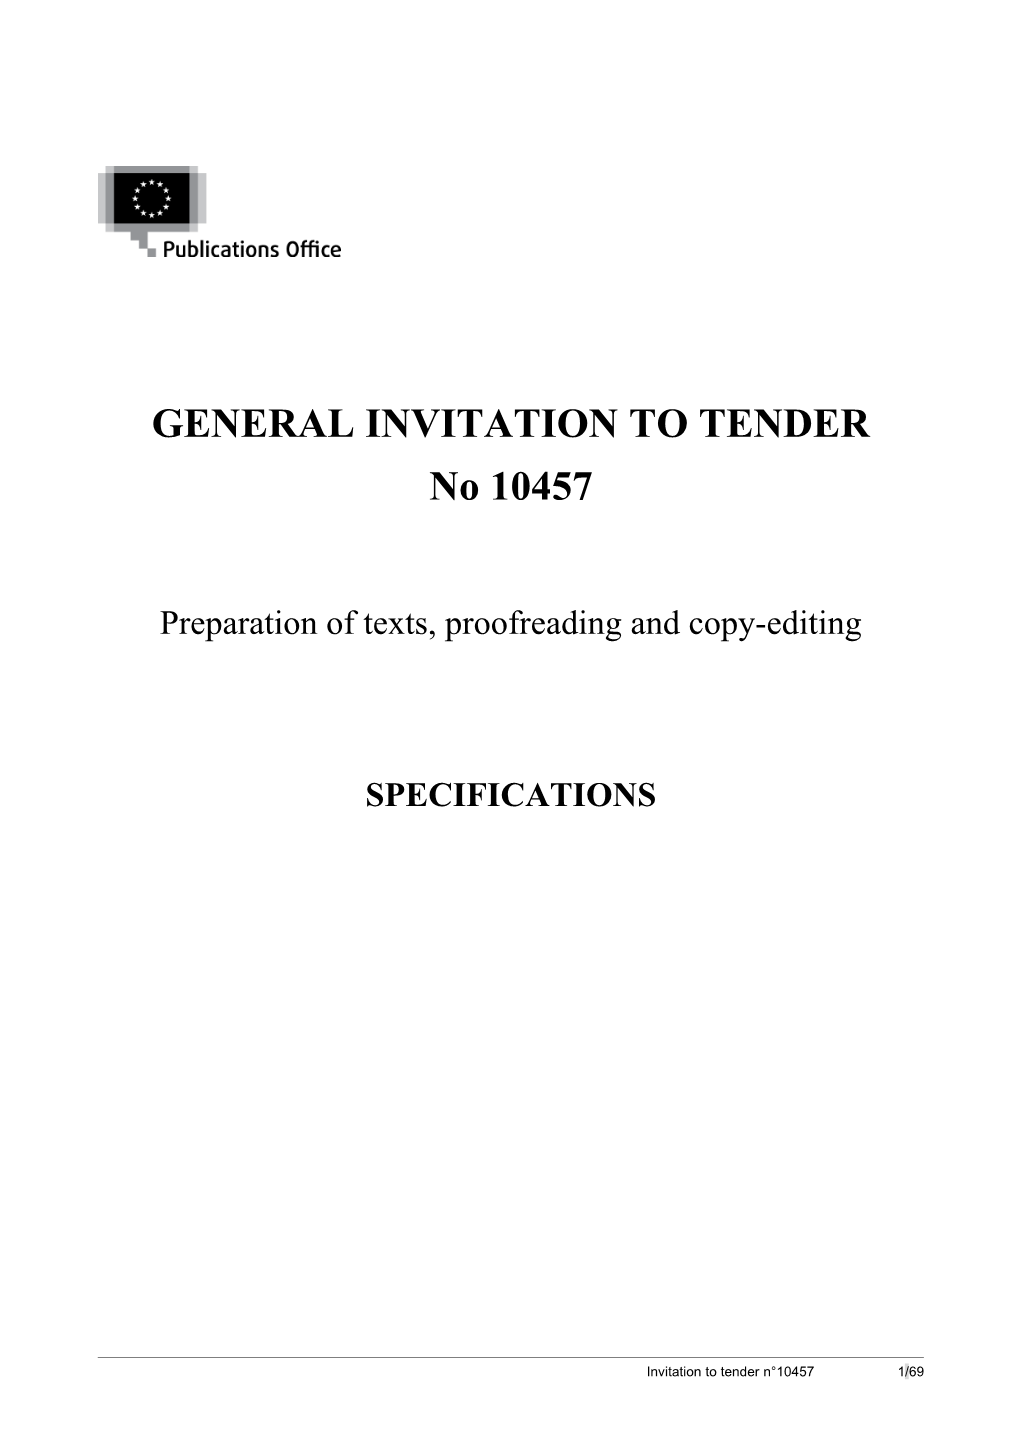 General Invitation to Tender